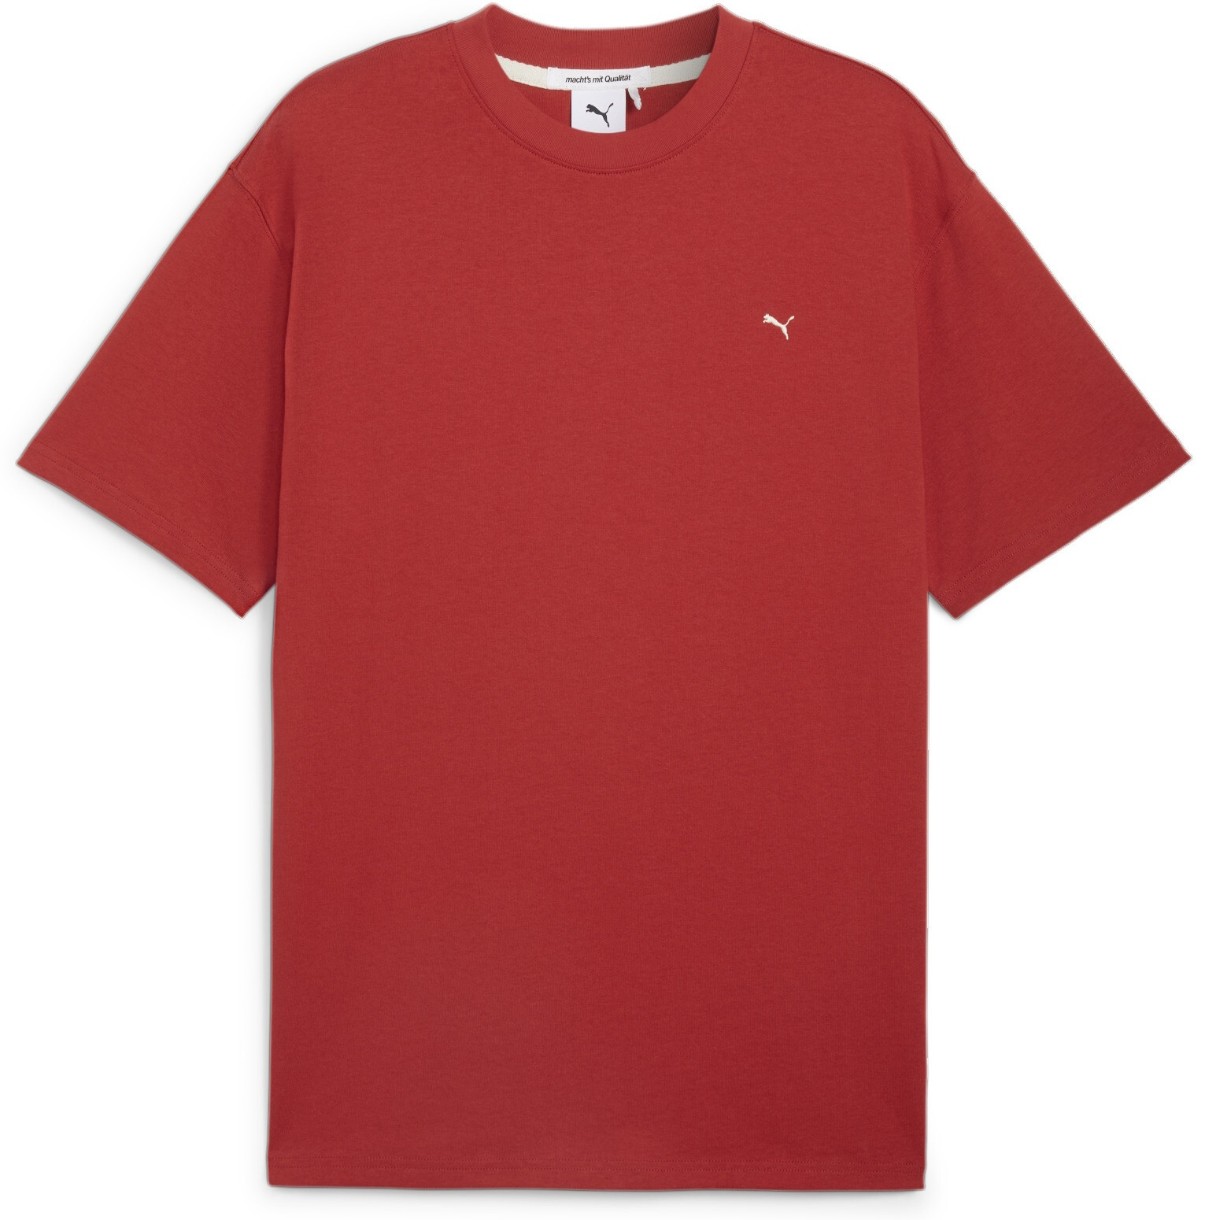 Мужская футболка Puma Mmq Tee Club Red, s.M